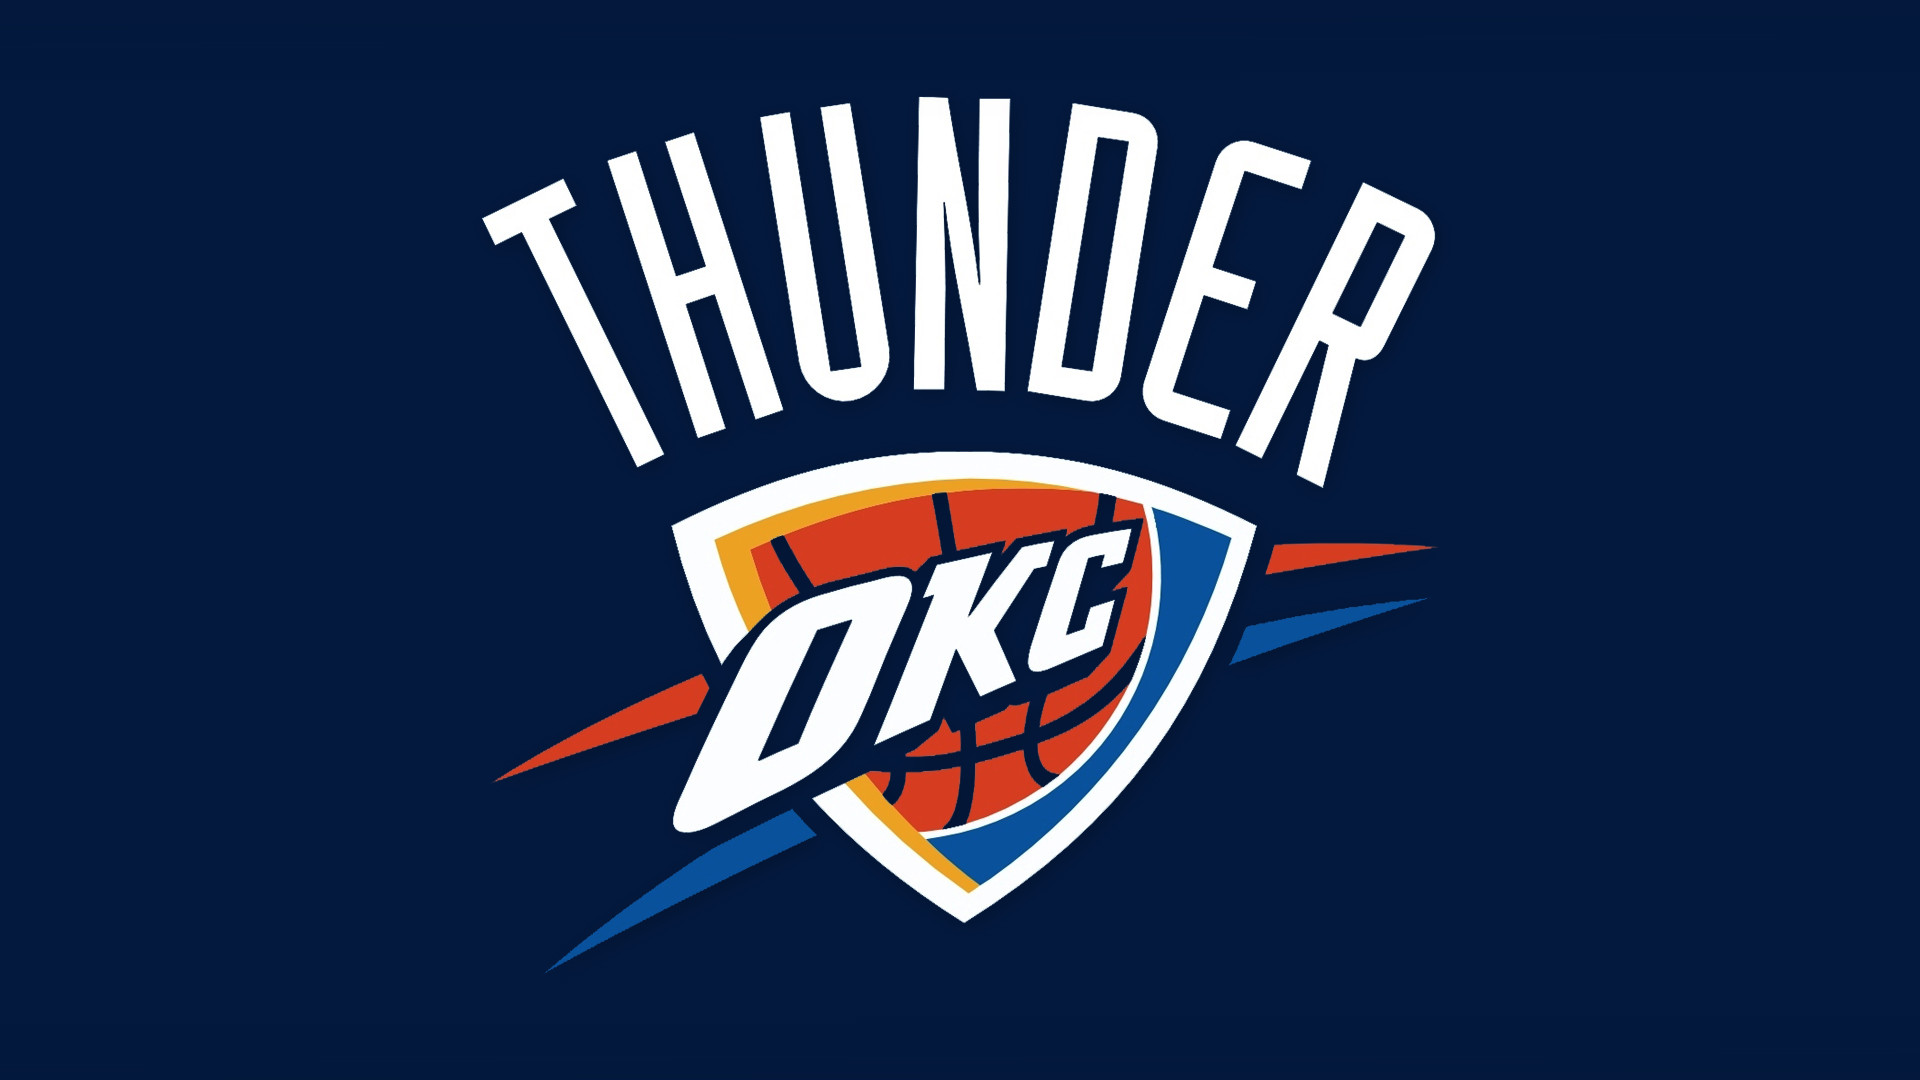 Oklahoma City Thunder Wordmark Logo Wallpaper by llu258 on DeviantArt